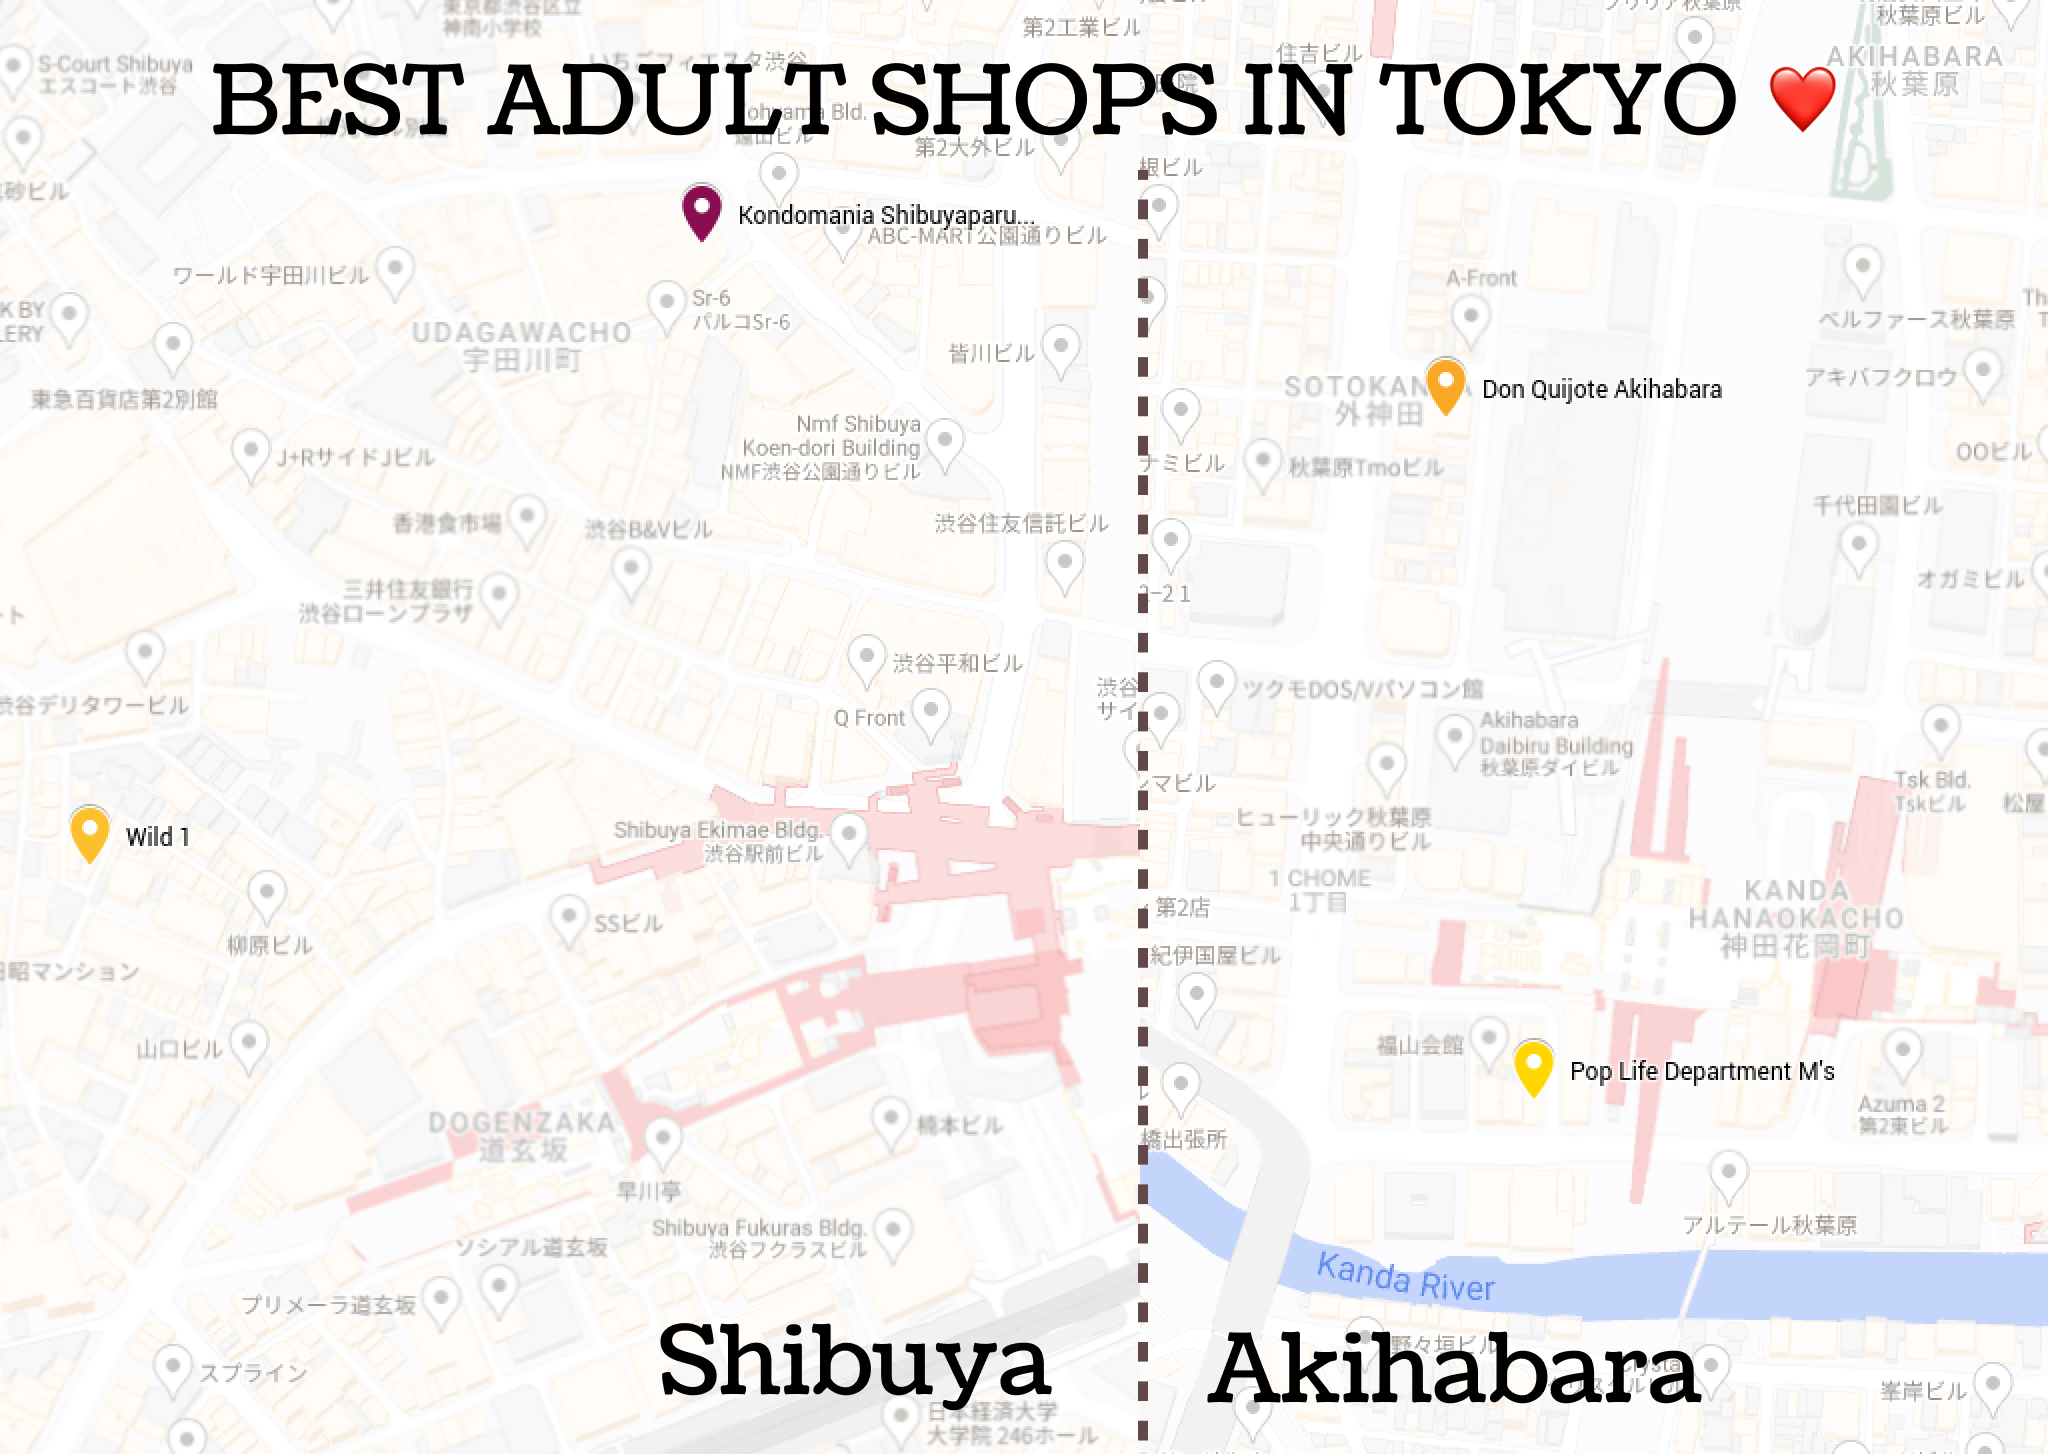 Best Adult Shops in Tokyo Map - Tokyo Adult Guide